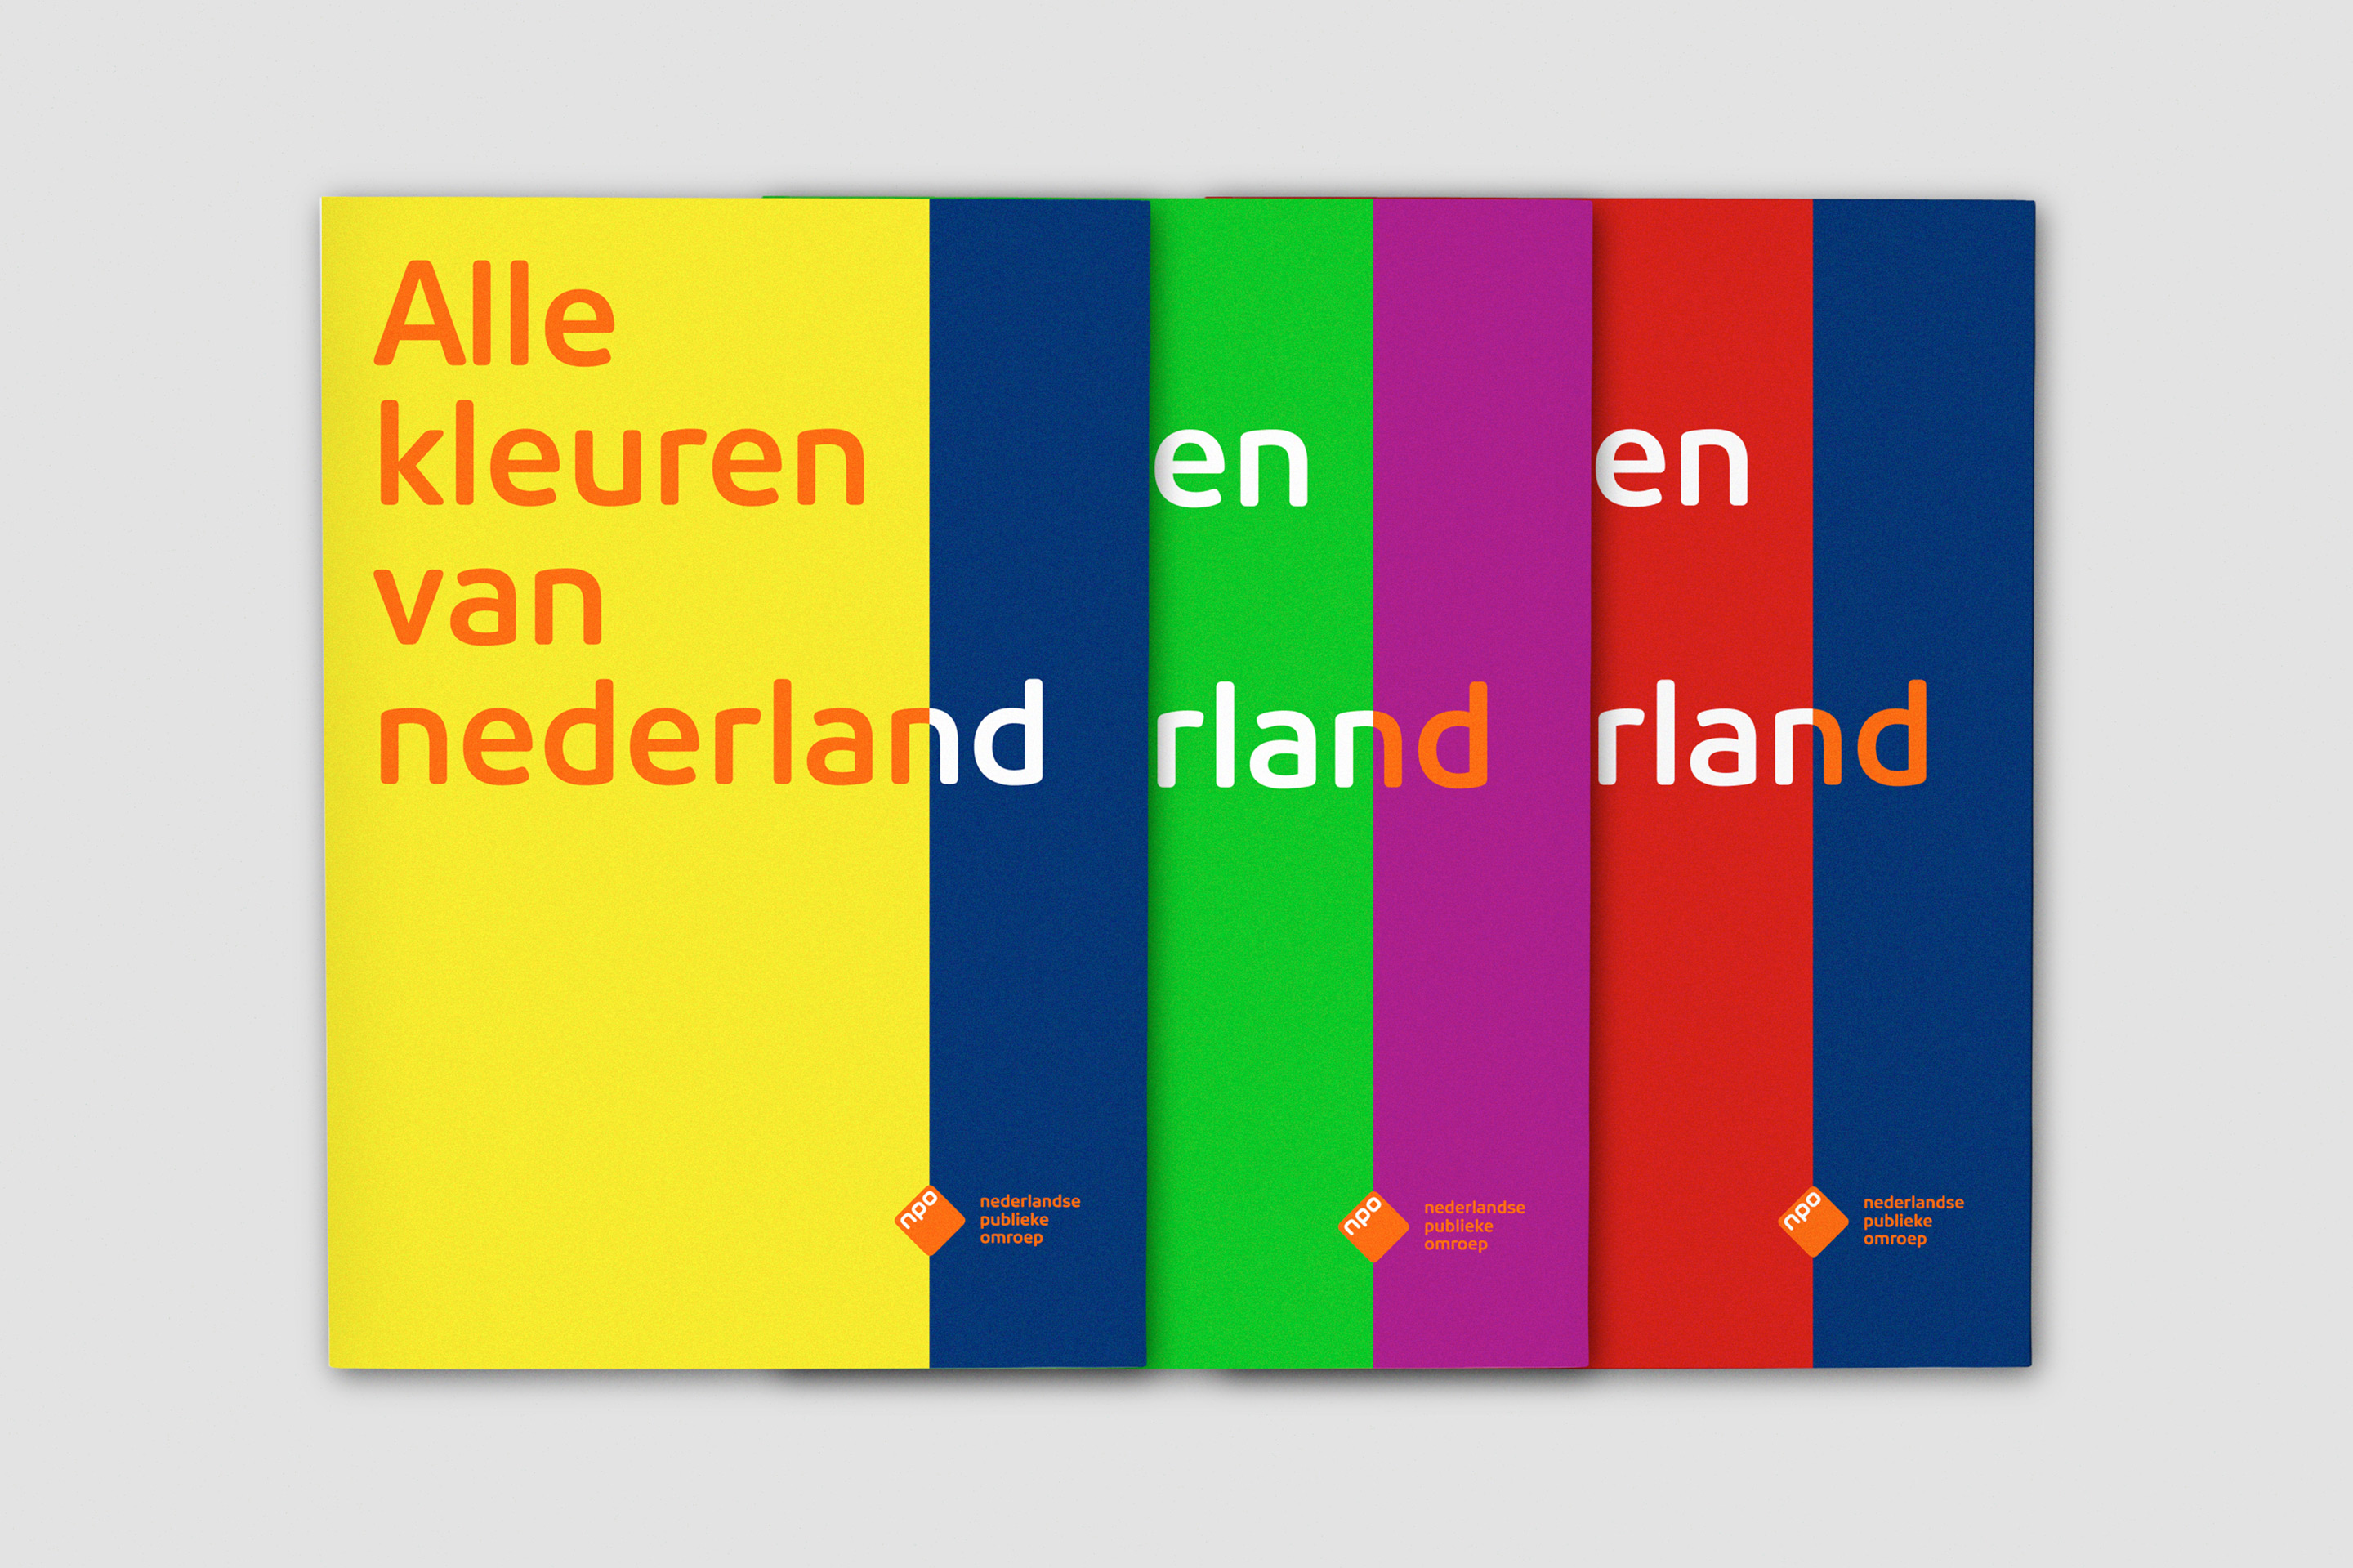 studio dumbar design visual brand identity NPO Netherlands Public Broadcasting brochure design